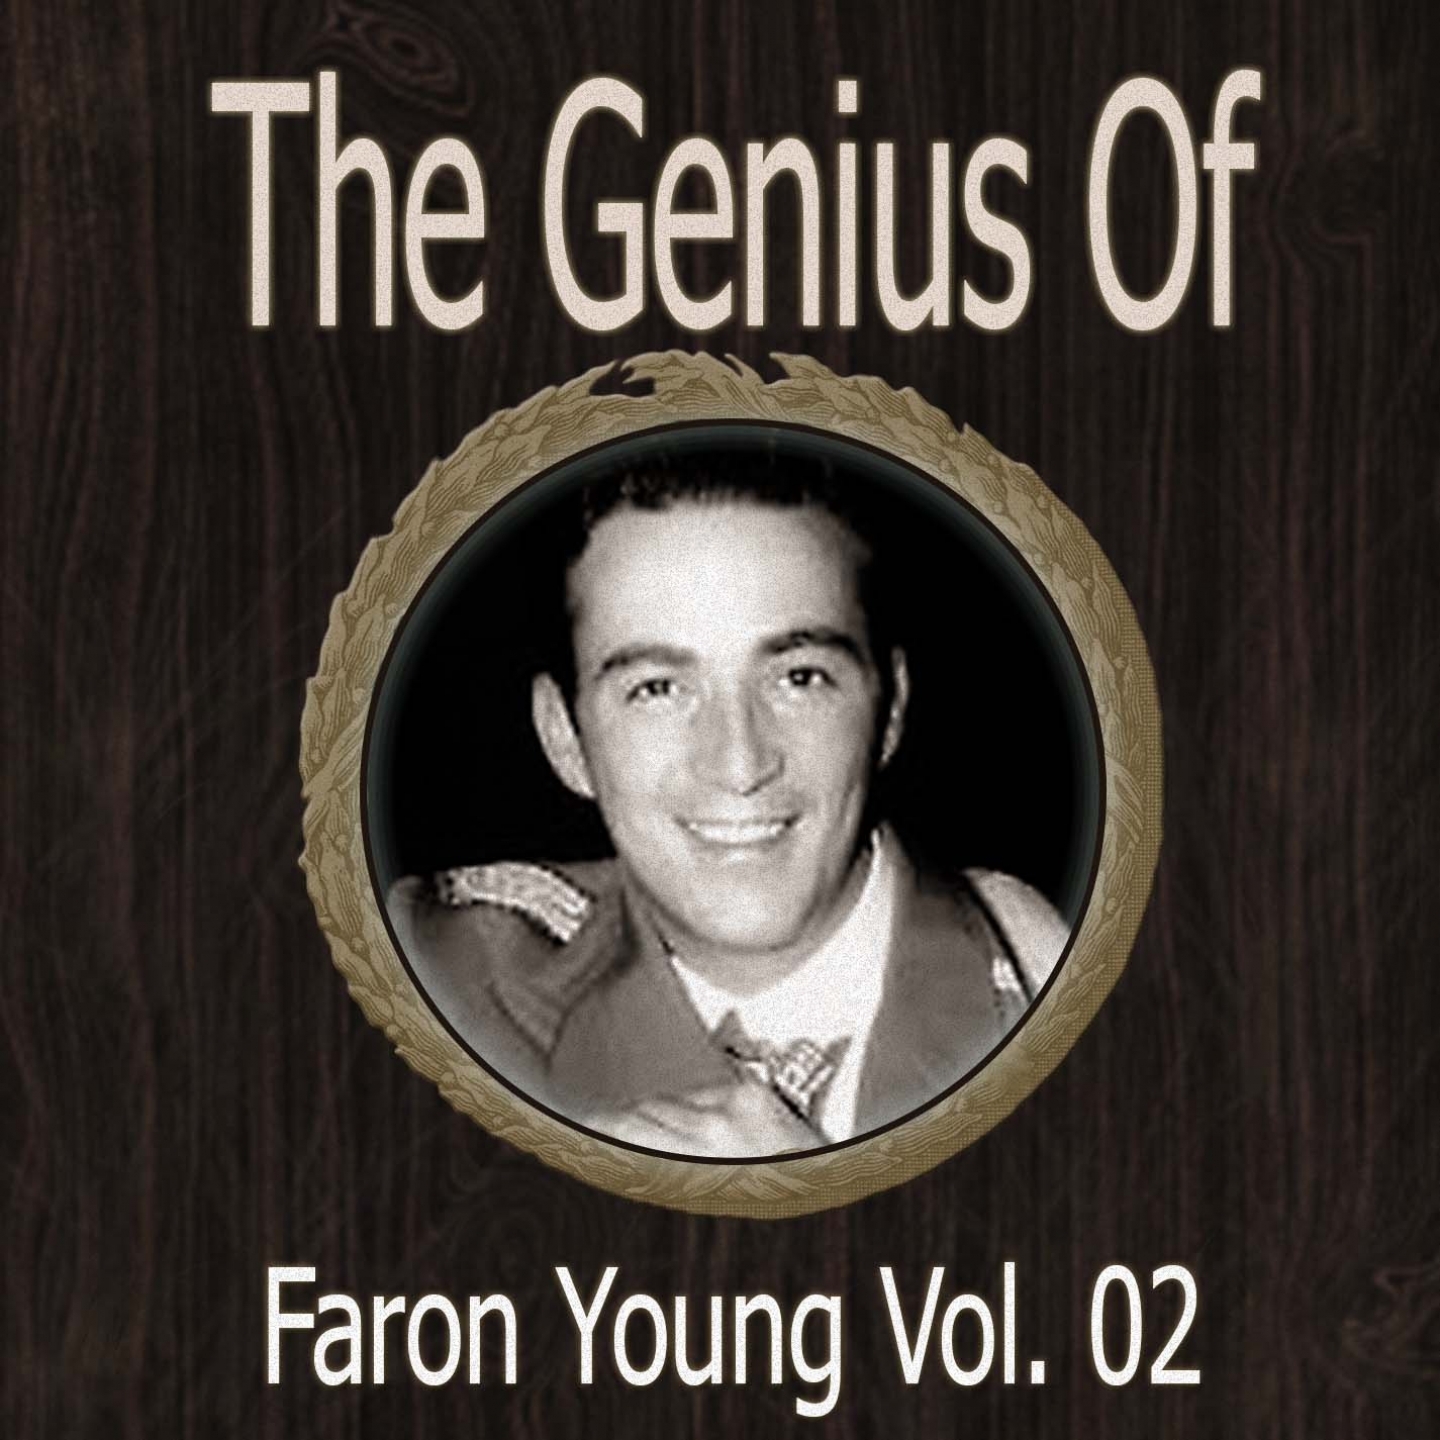 The Genius of Faron Young Vol 02